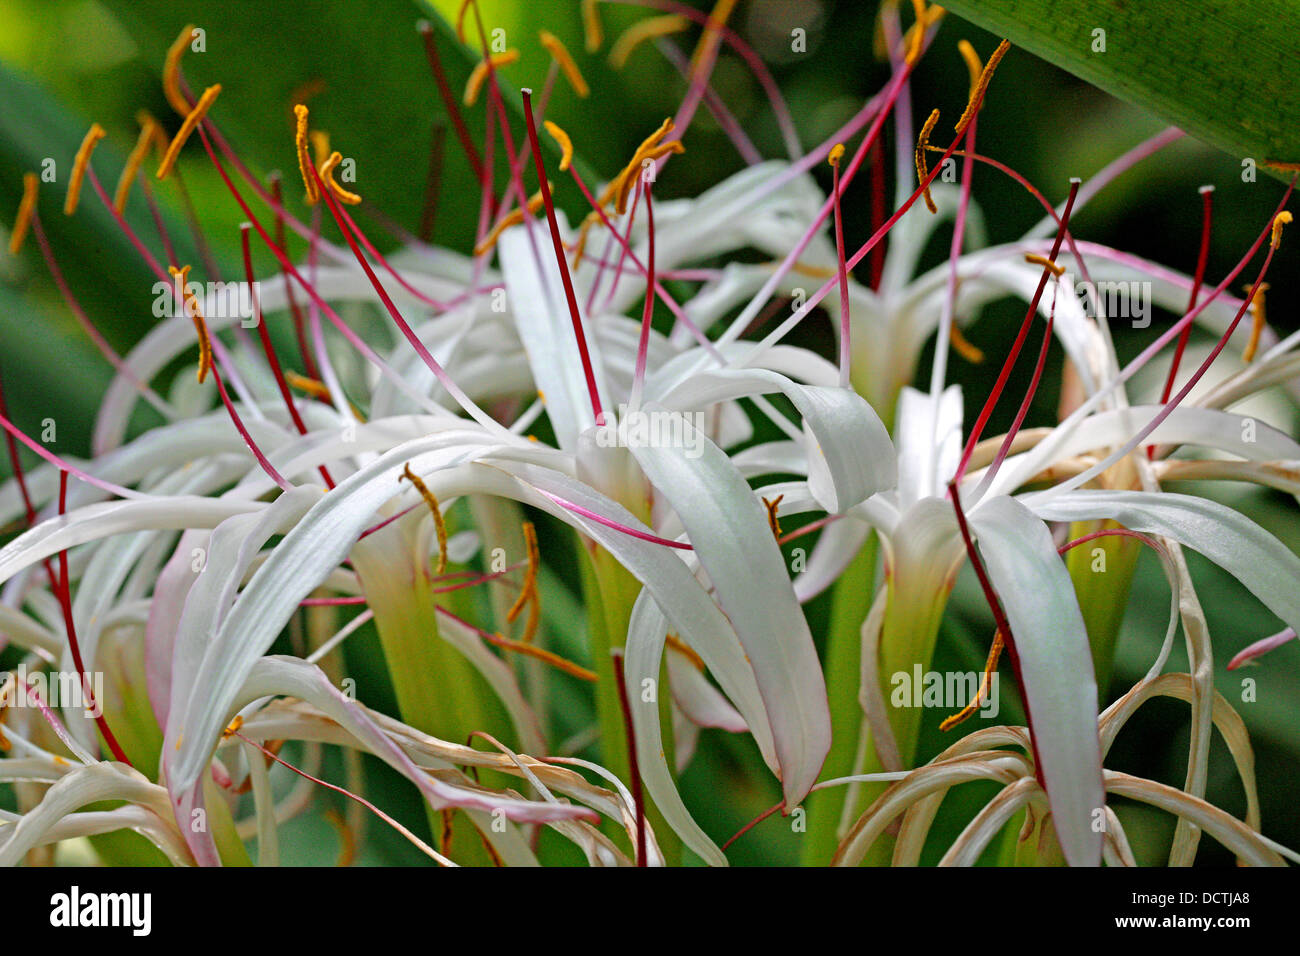 Lys de Midlands, Crinum mauritianum, Amaryllidaceae. A Rare Lily from Mauritius, Madagascar, Africa. Stock Photo